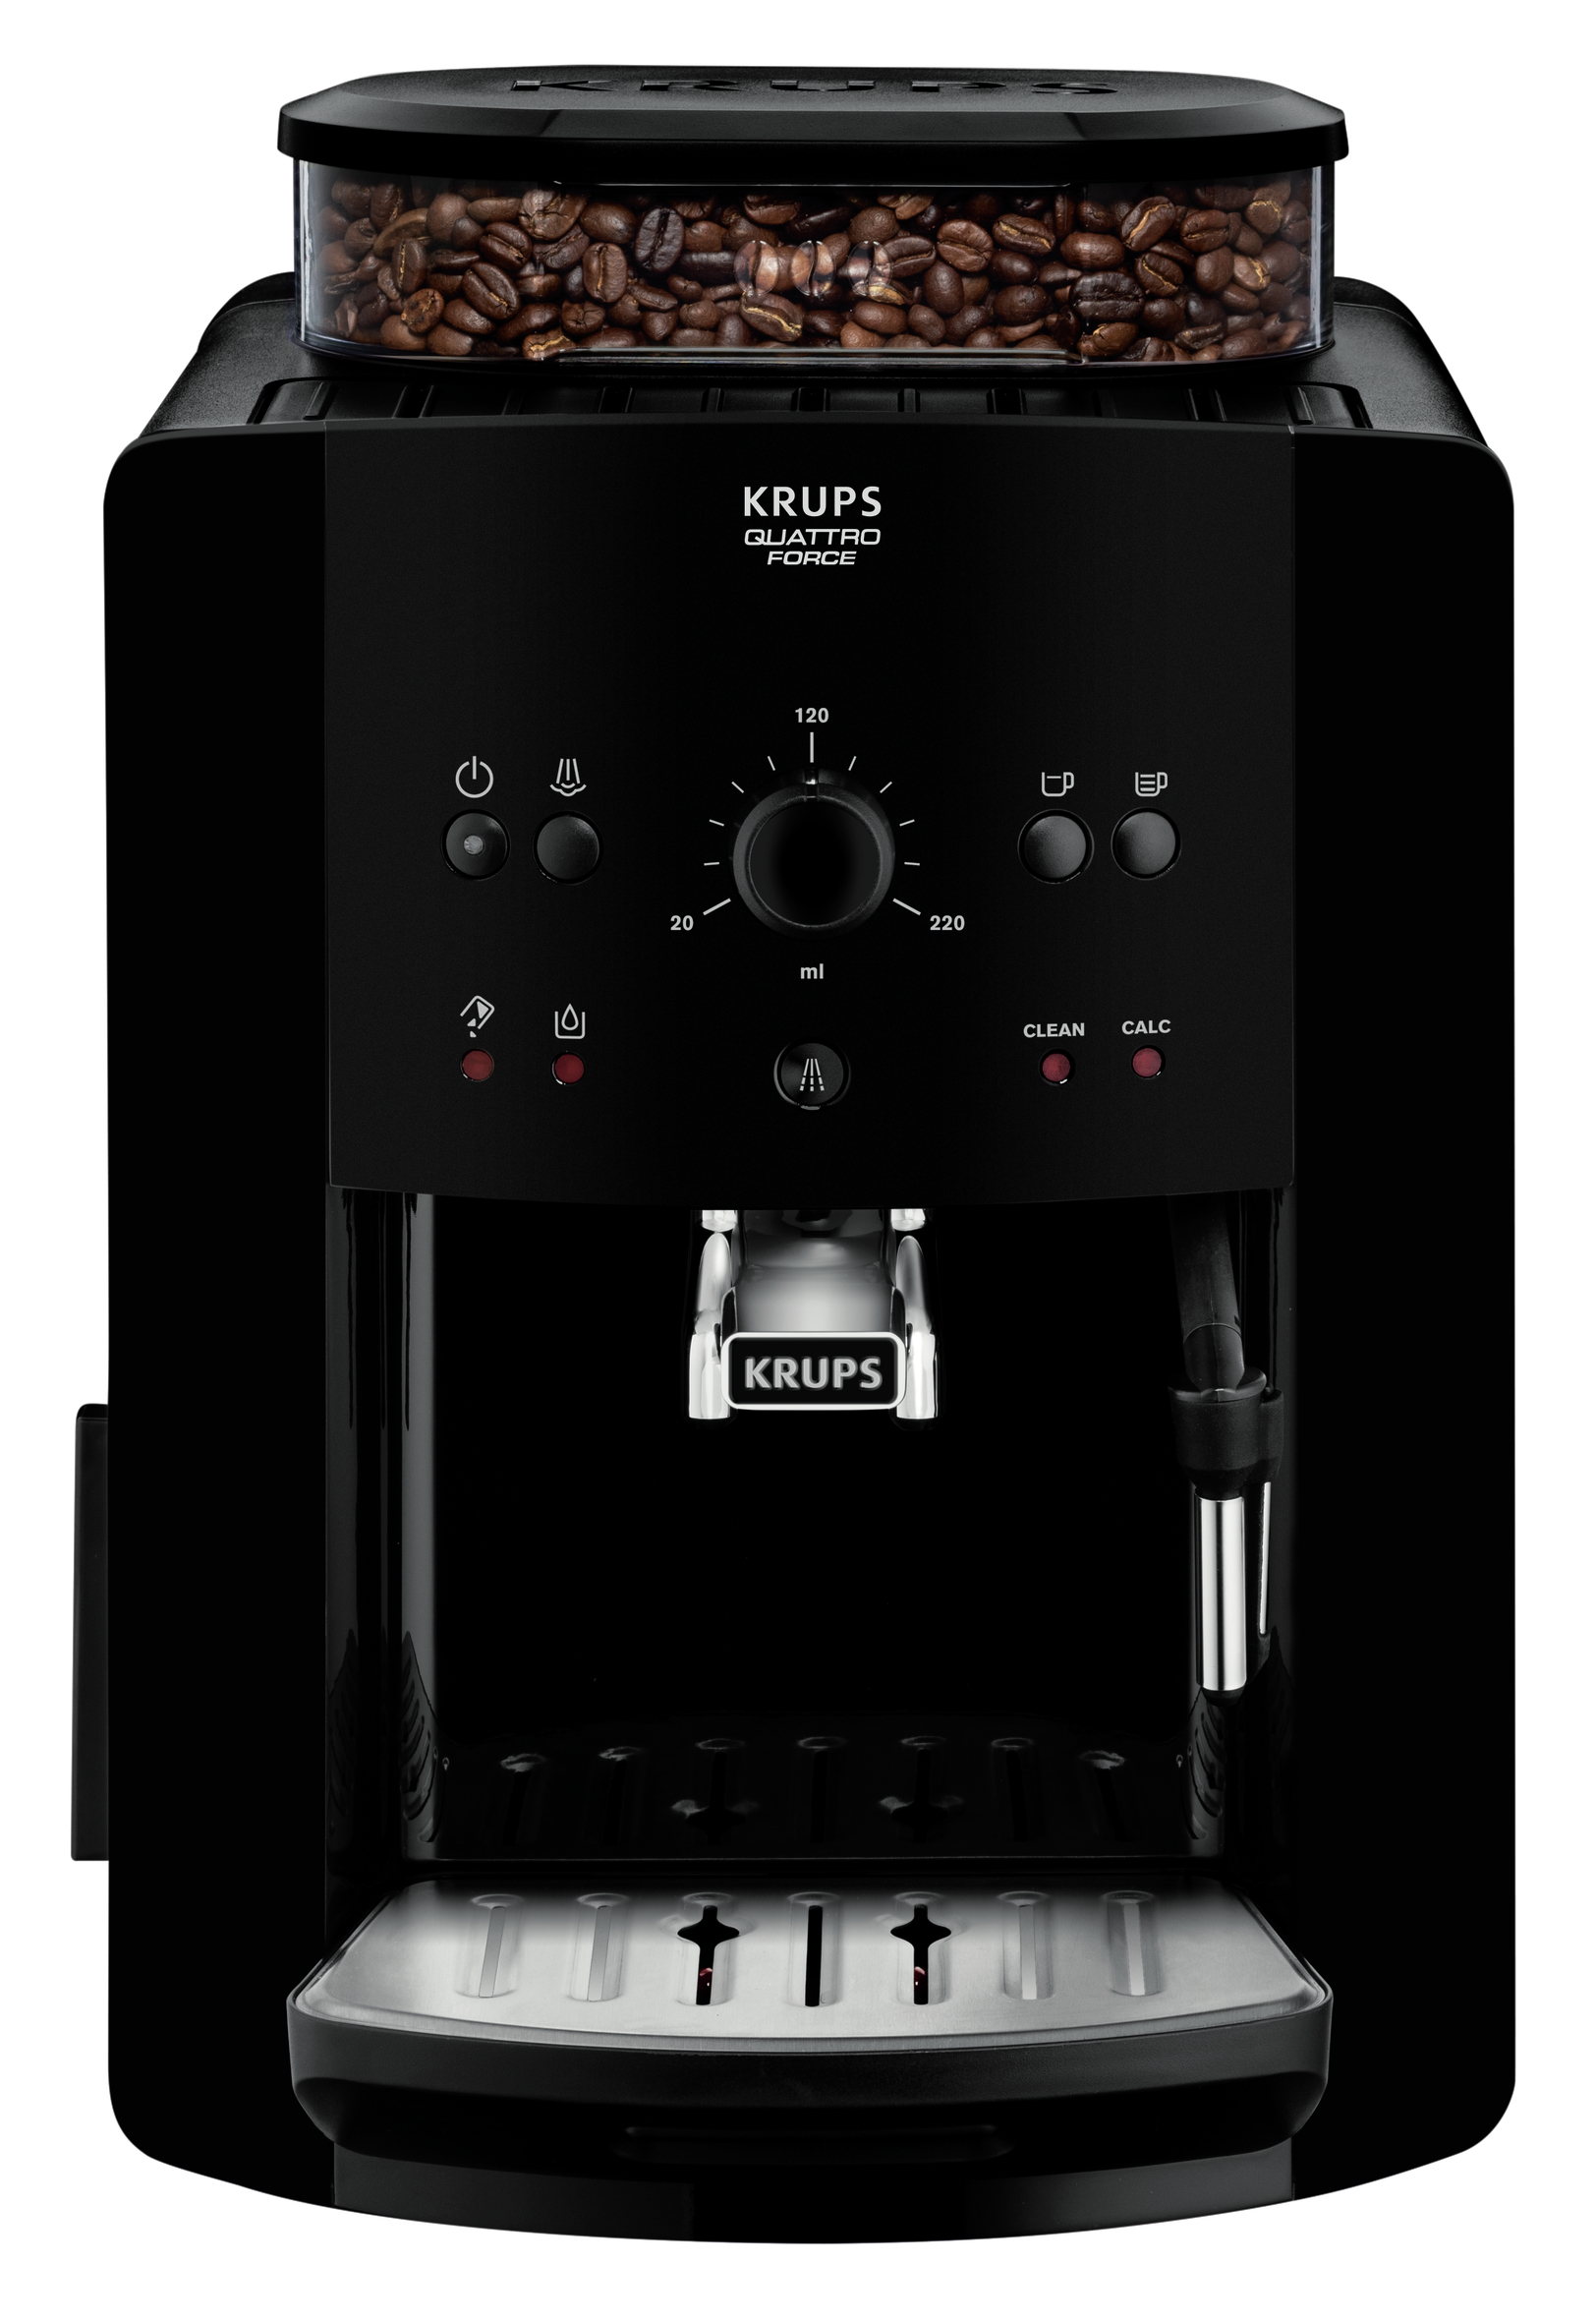 Krups Arabica EA8110 coffee maker